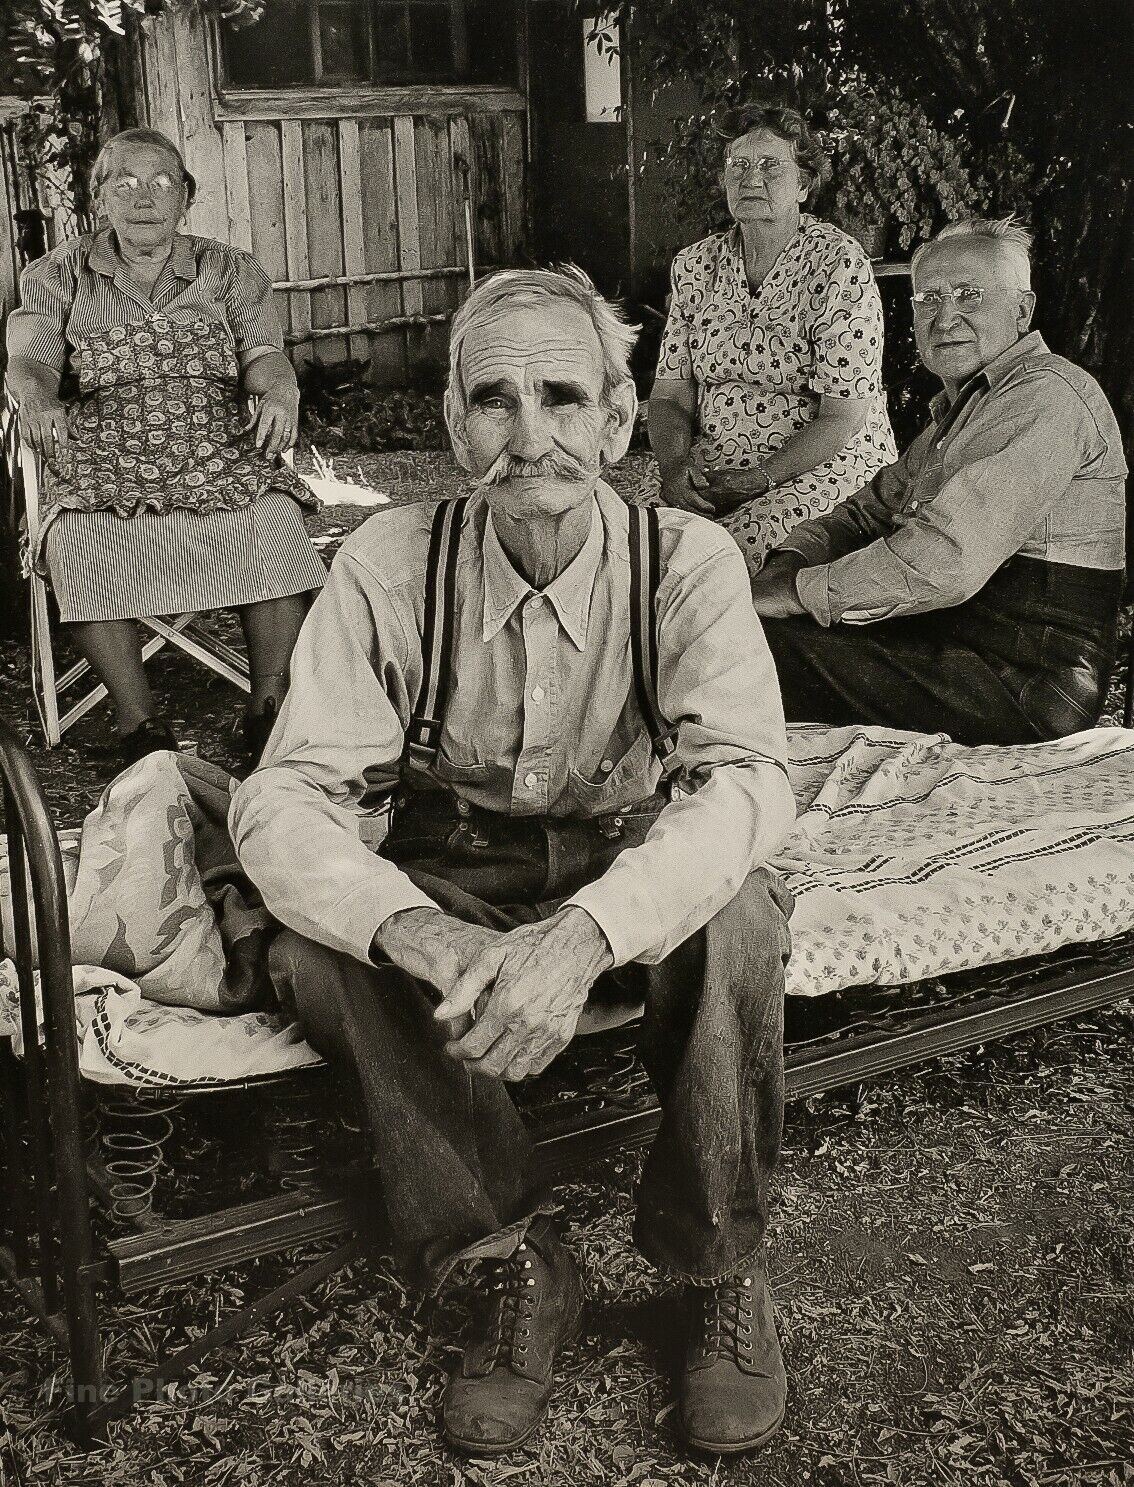 1953/72 ANSEL ADAMS Vintage Farm Family Camp Melones California Photo Art 11X14